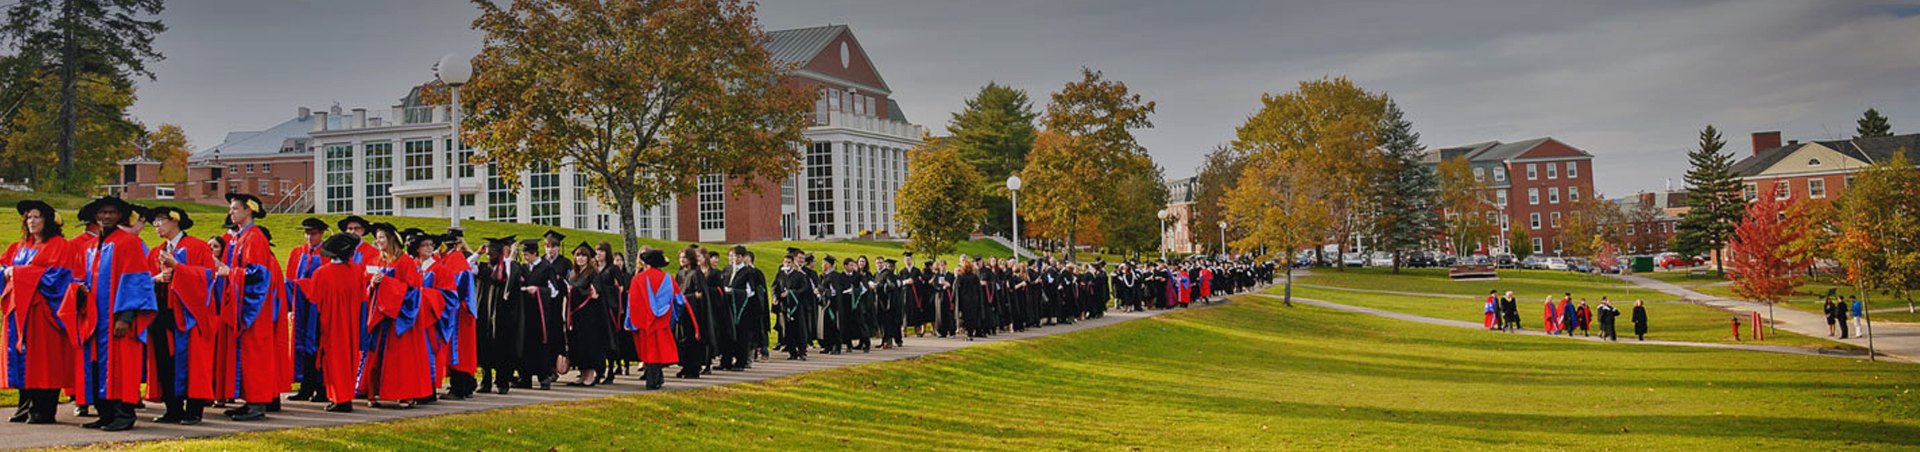 University of New Brunswick Campus